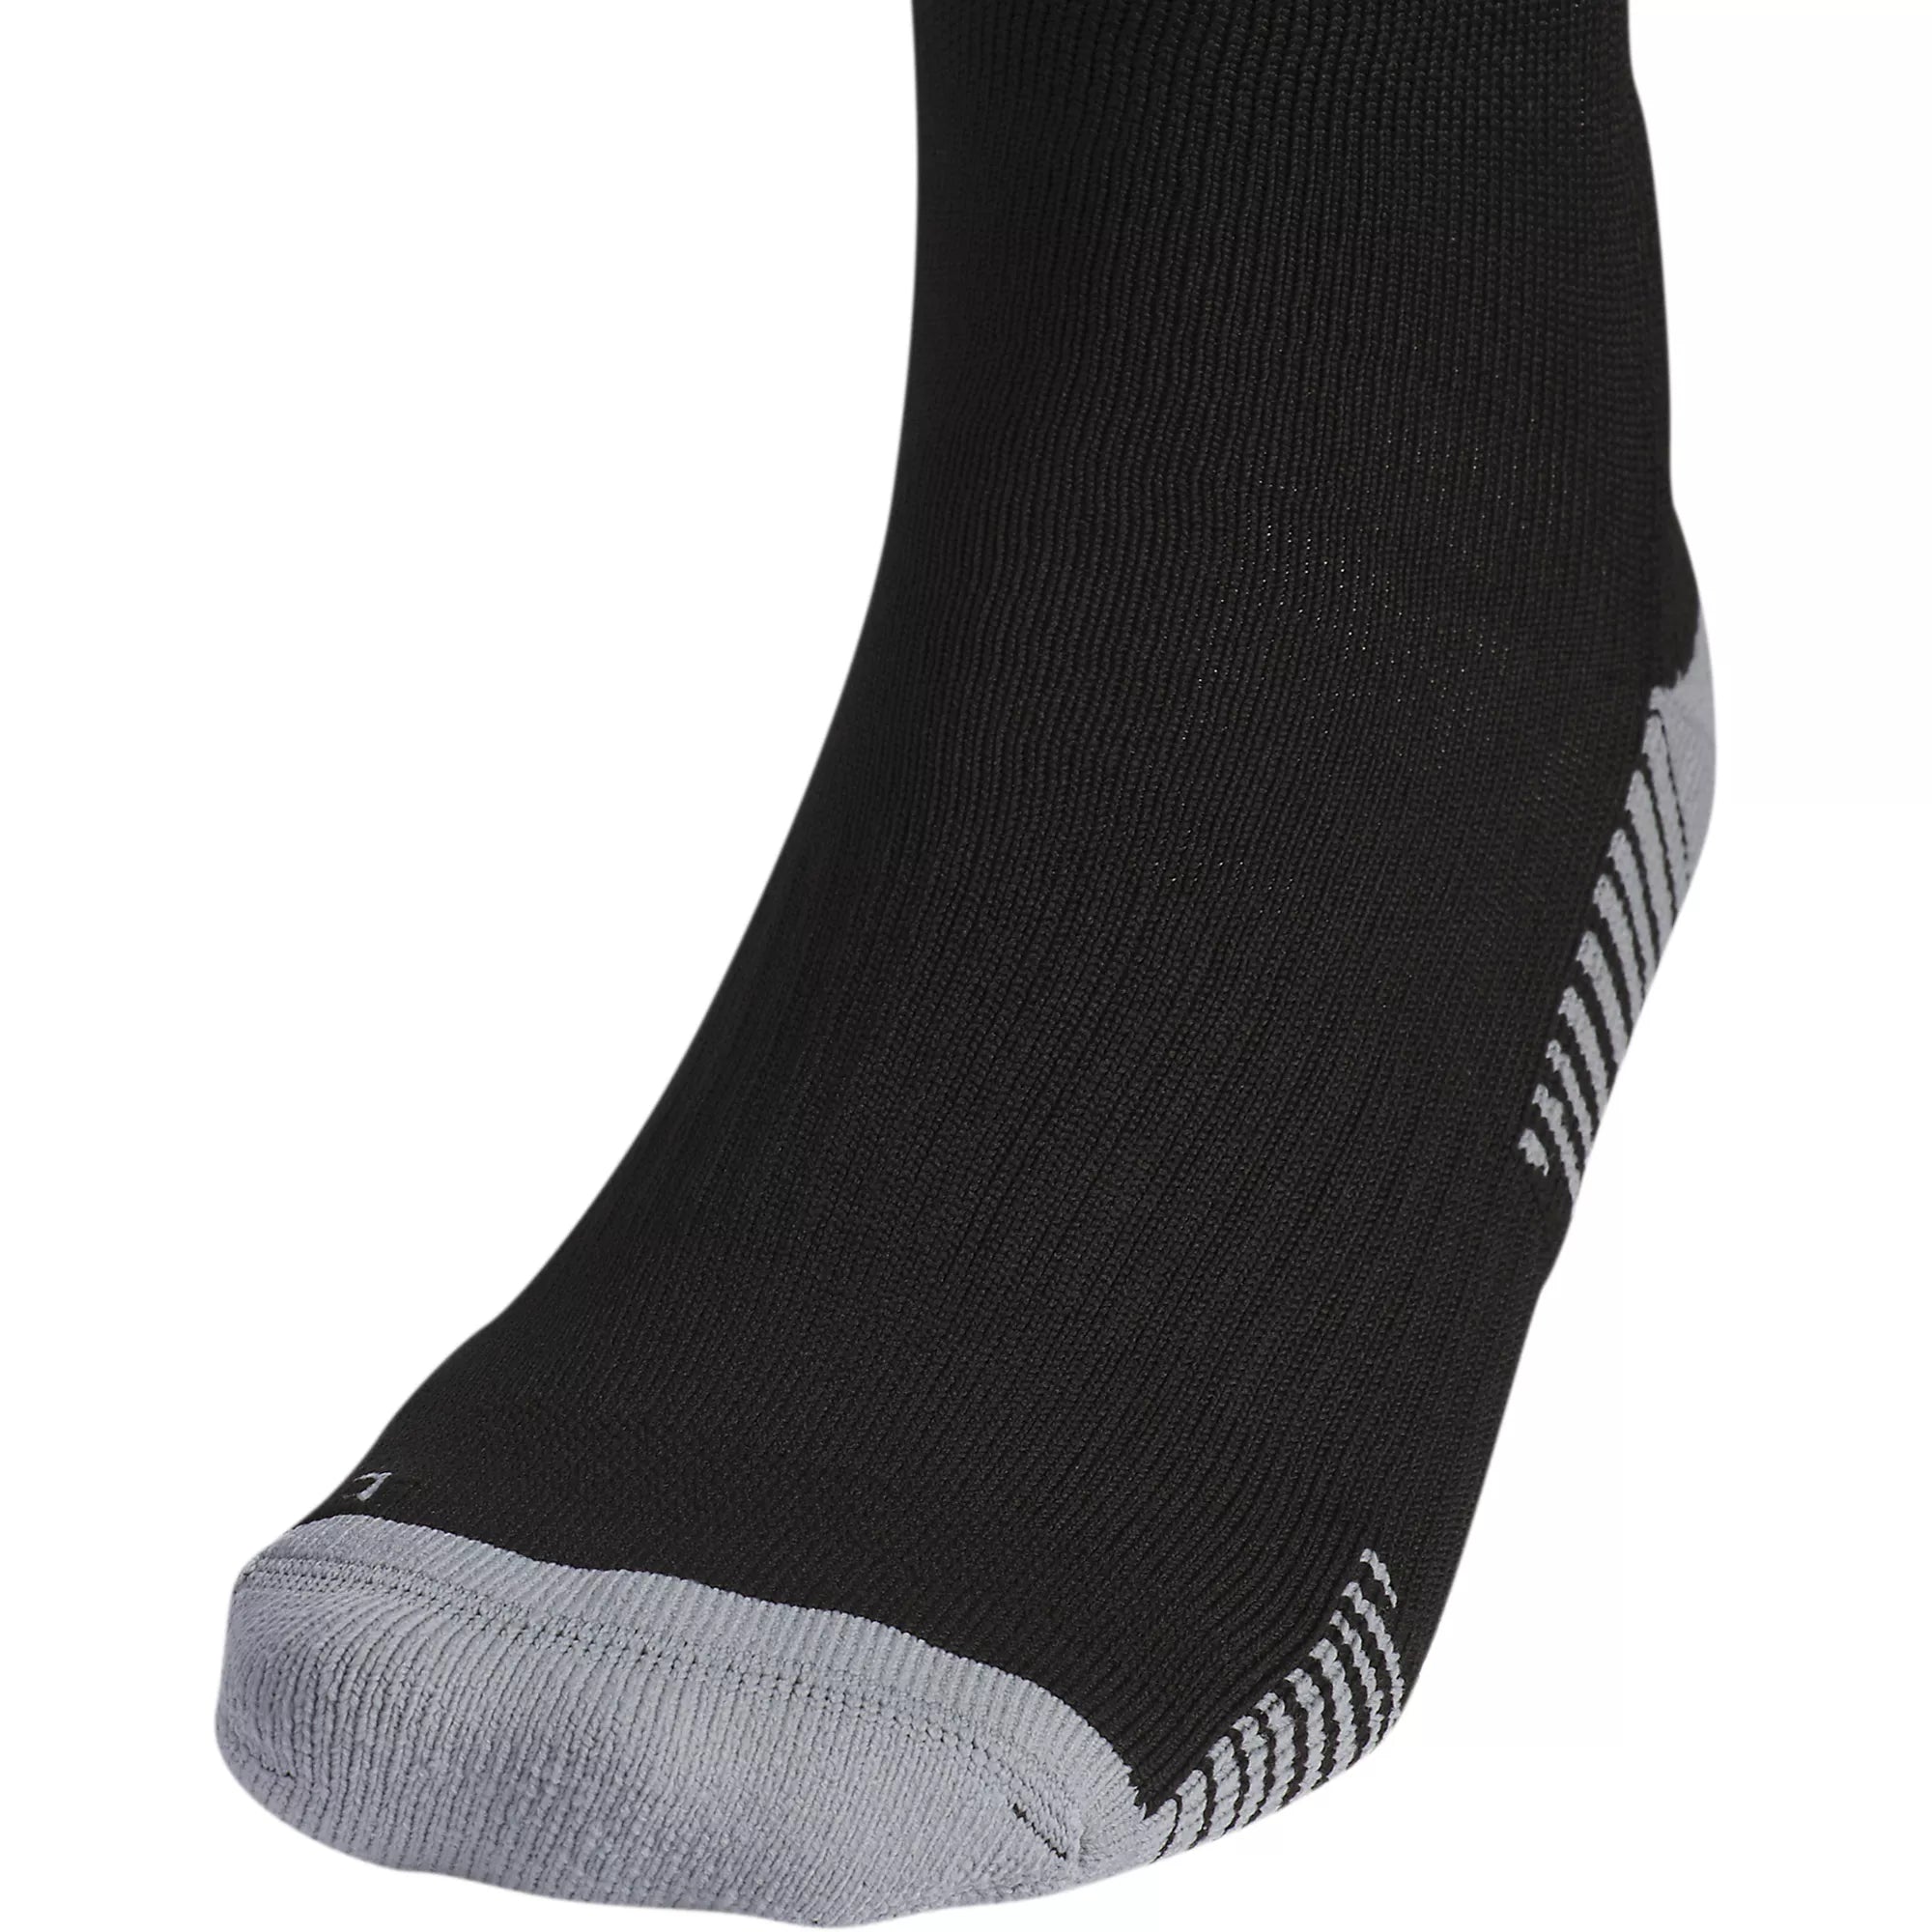 Adidas Copa Zone Cushion 5 OTC Socks - Black/White